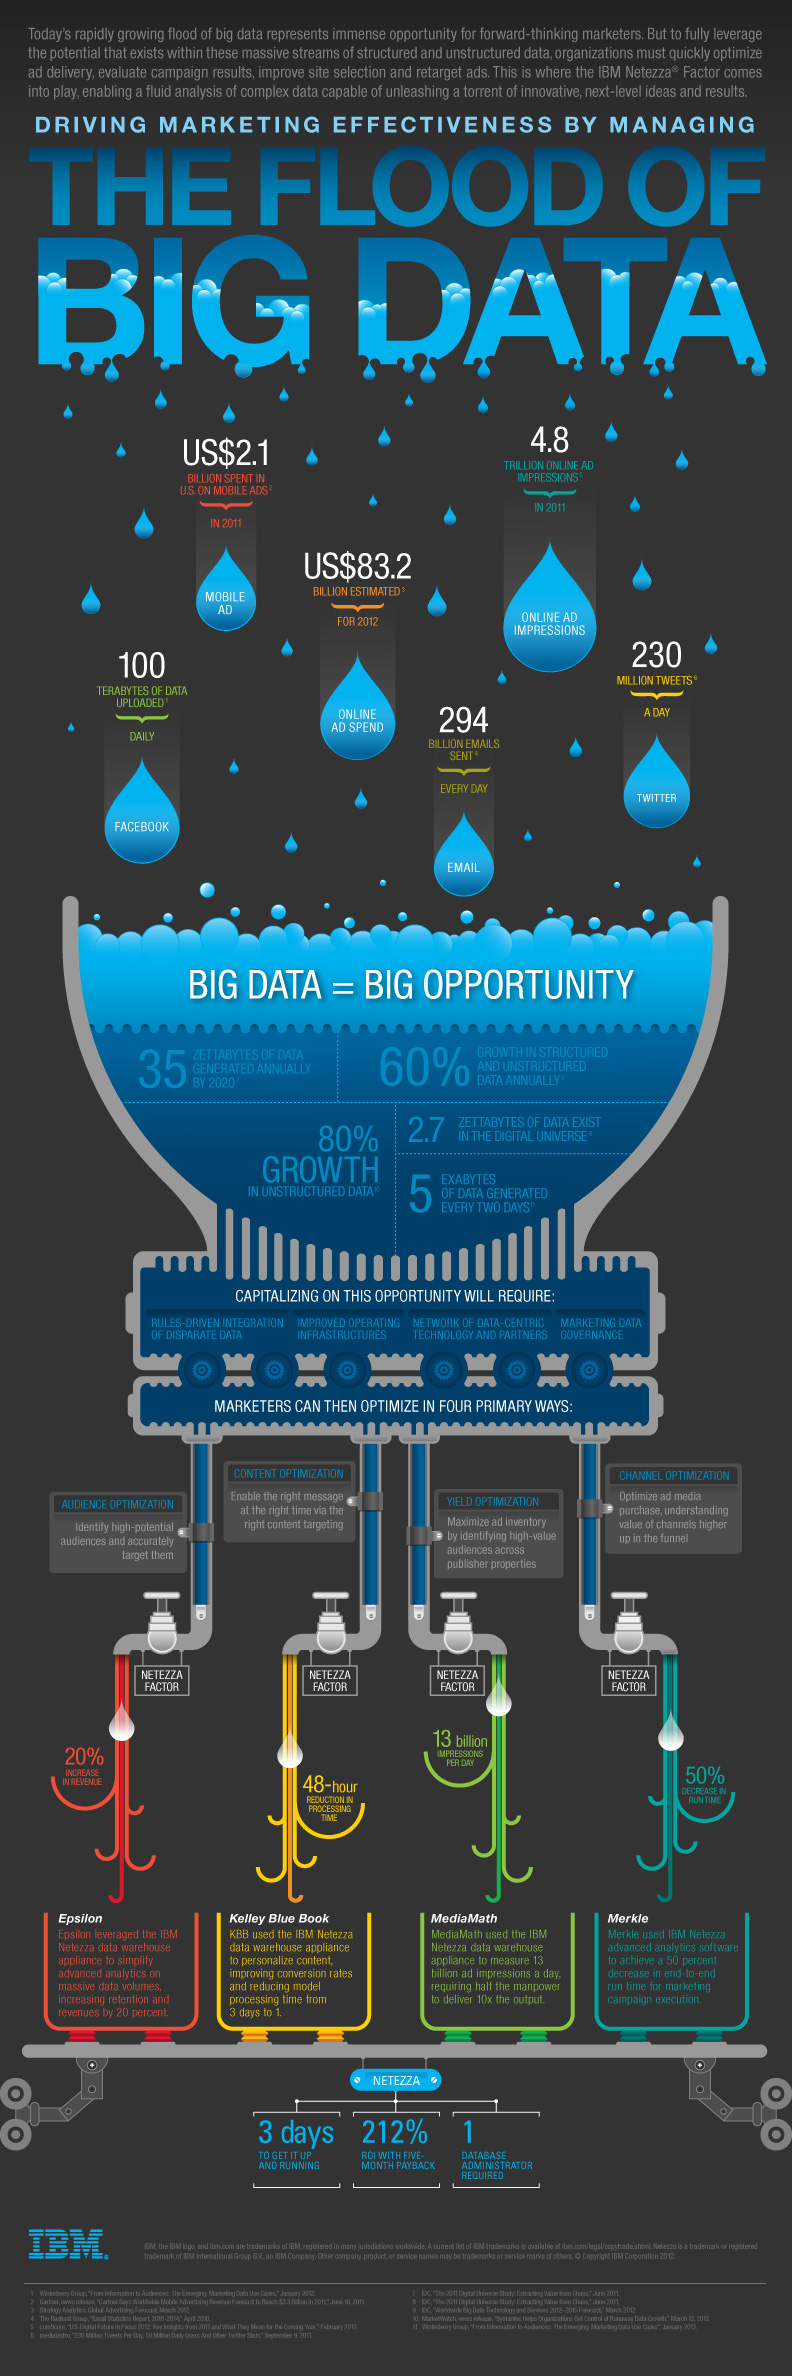 Big data drives marketing efforts